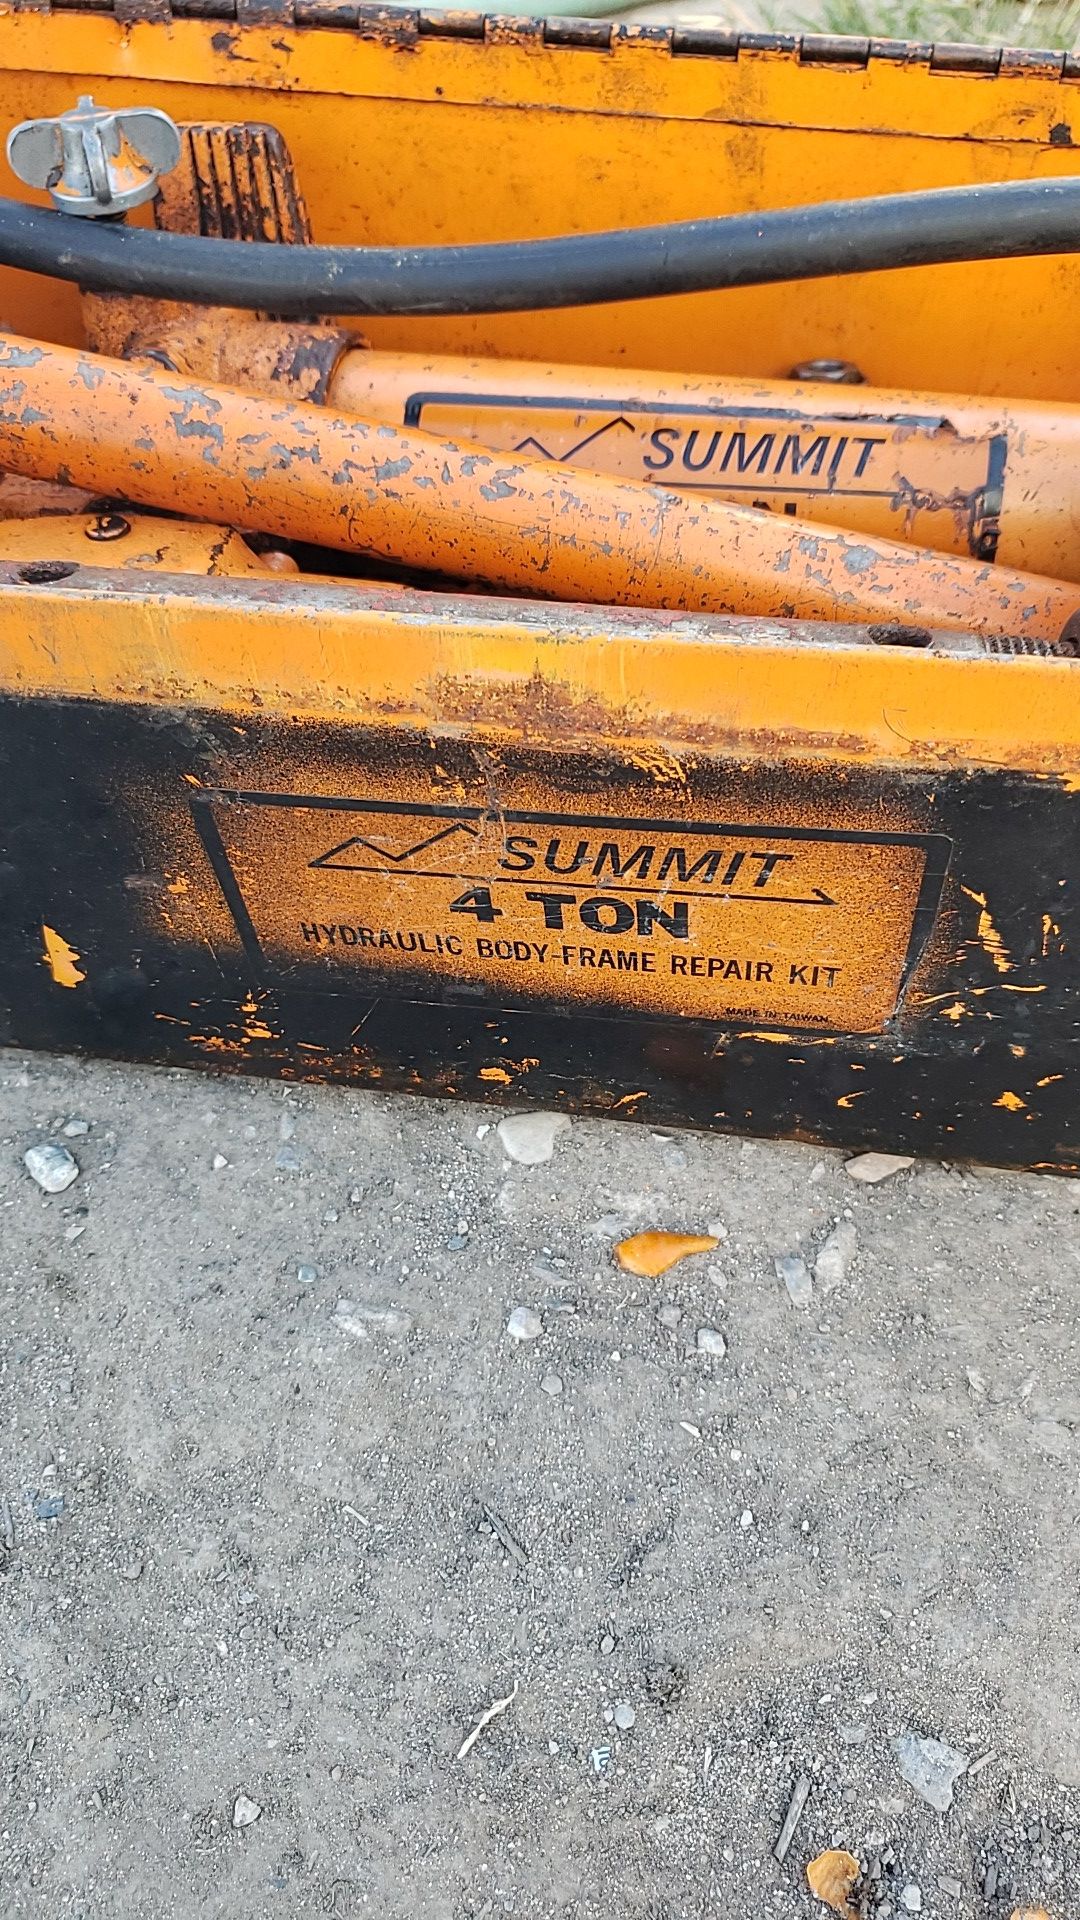 Summit 4 ton hydraulic body frame repair kit